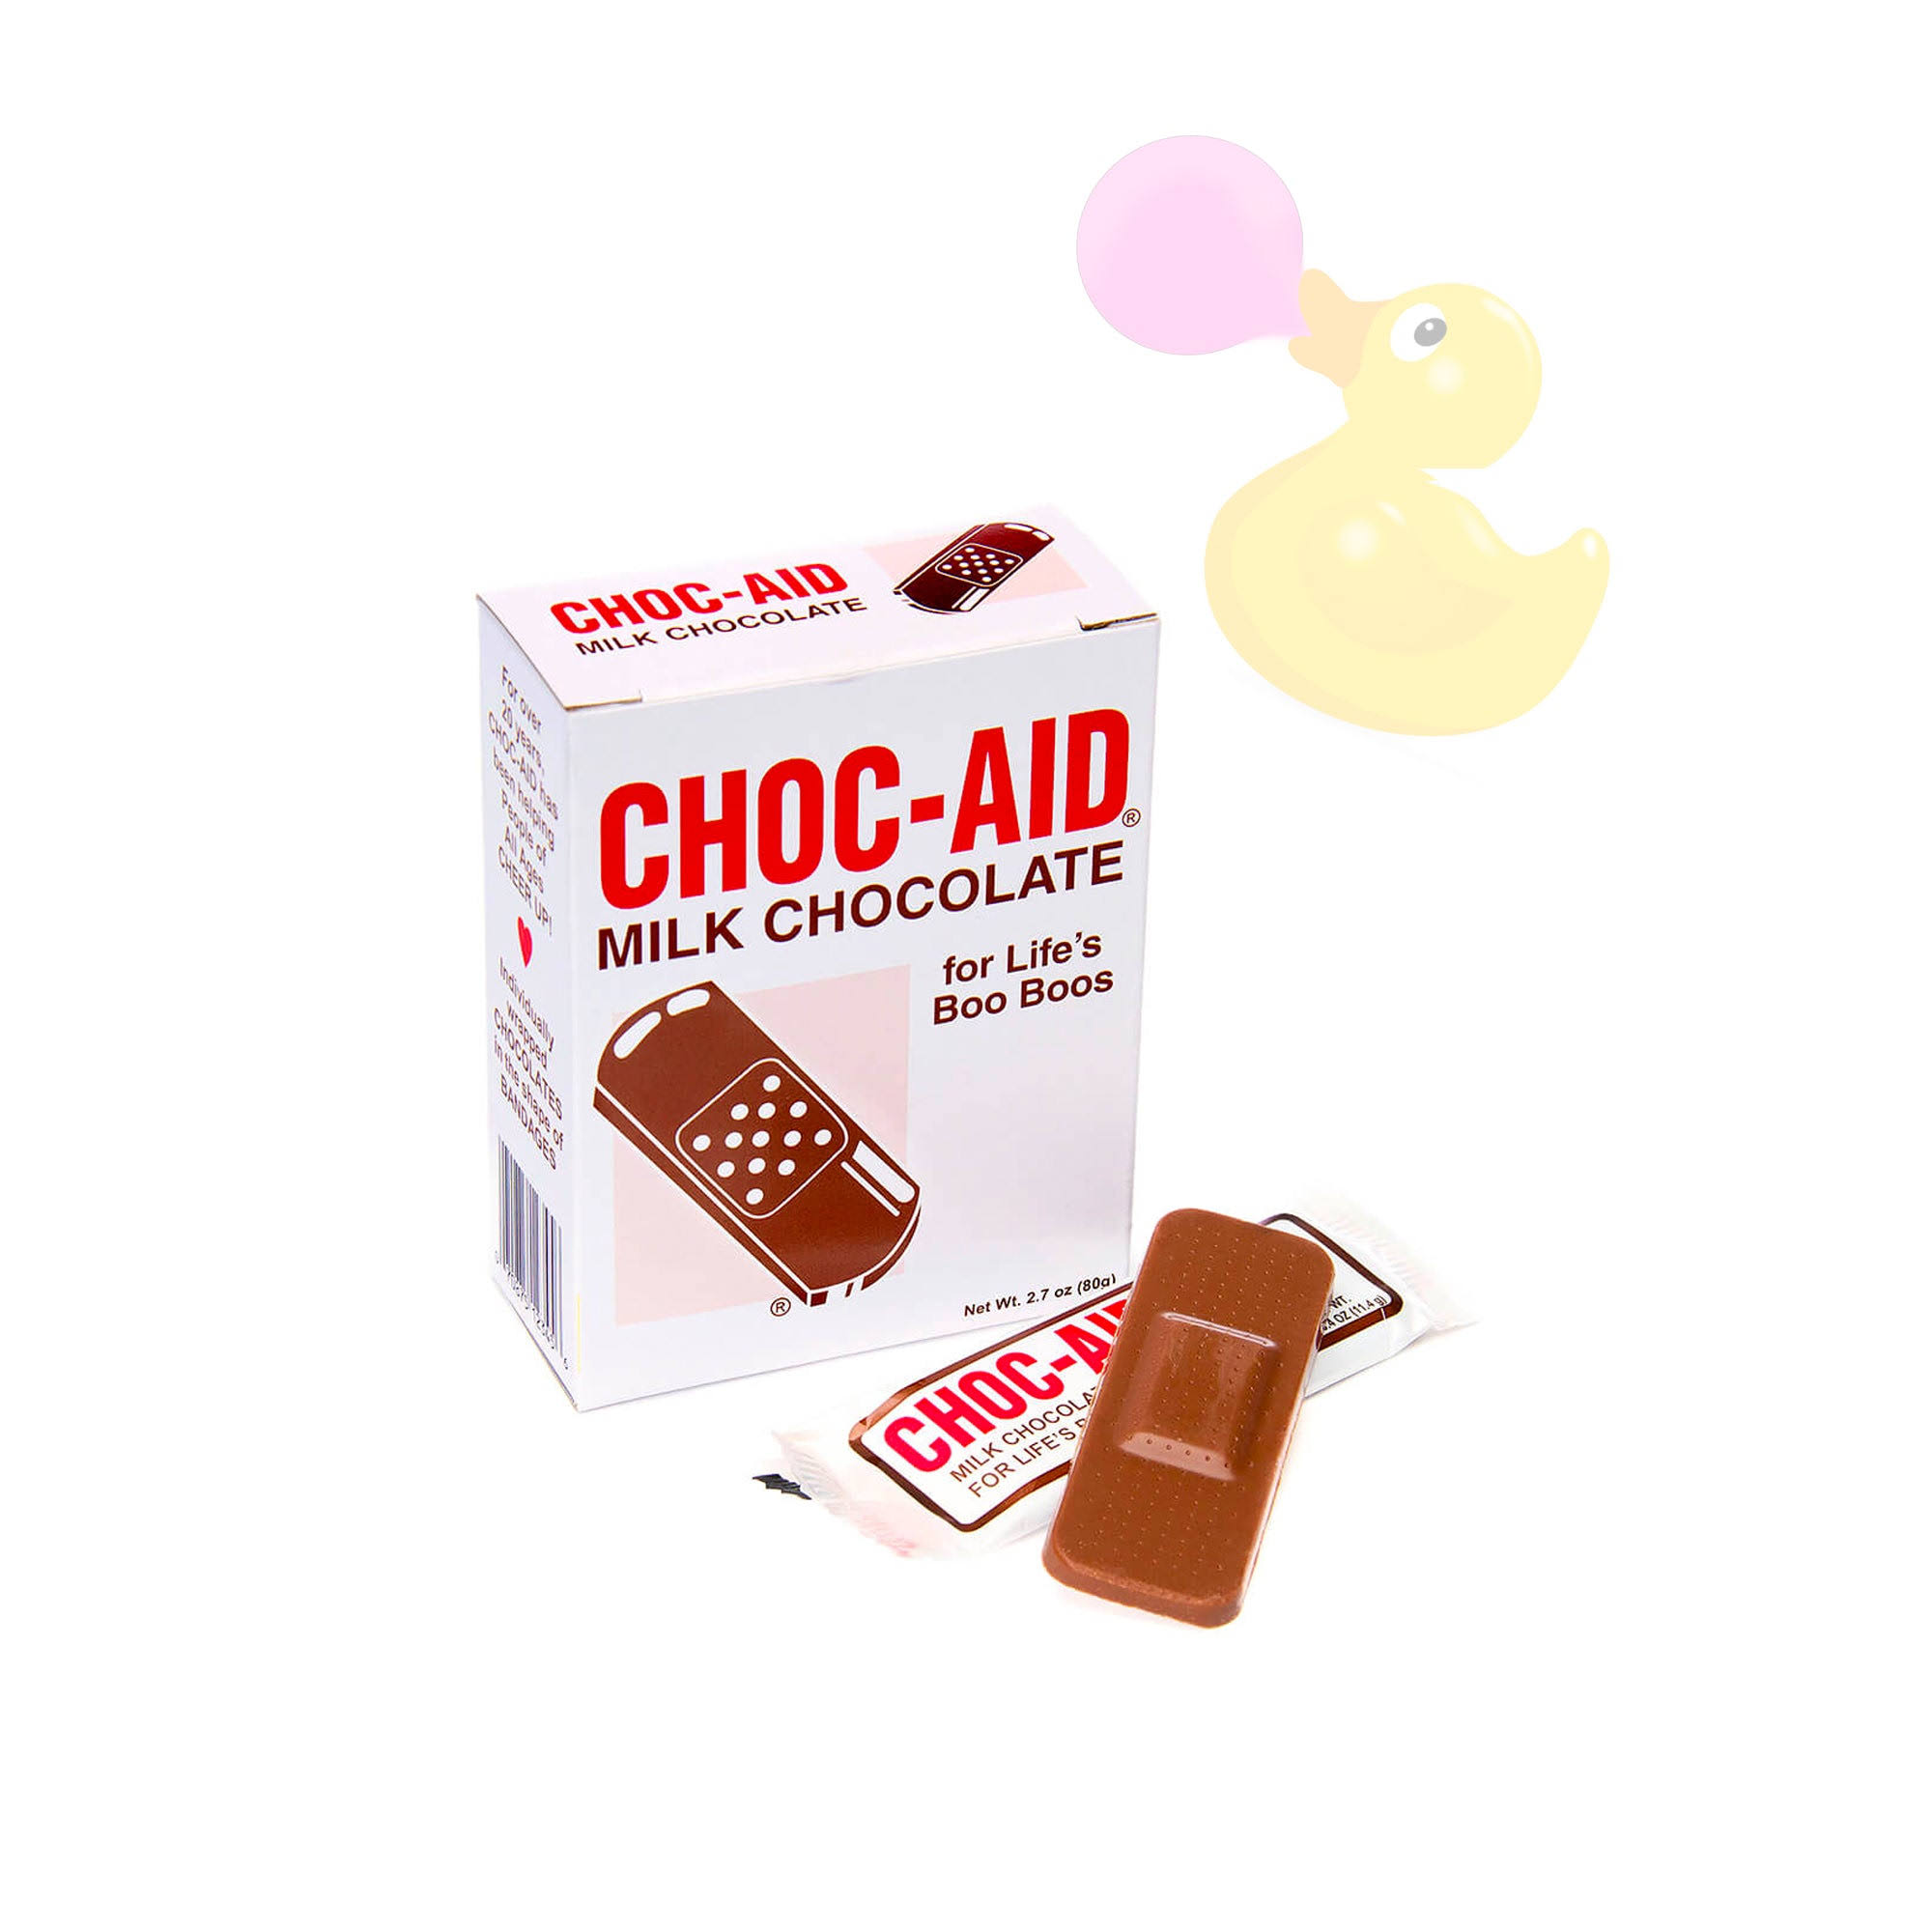 Choc-Aid Milk Chocolate For LIfe's Boo Boos - 56g